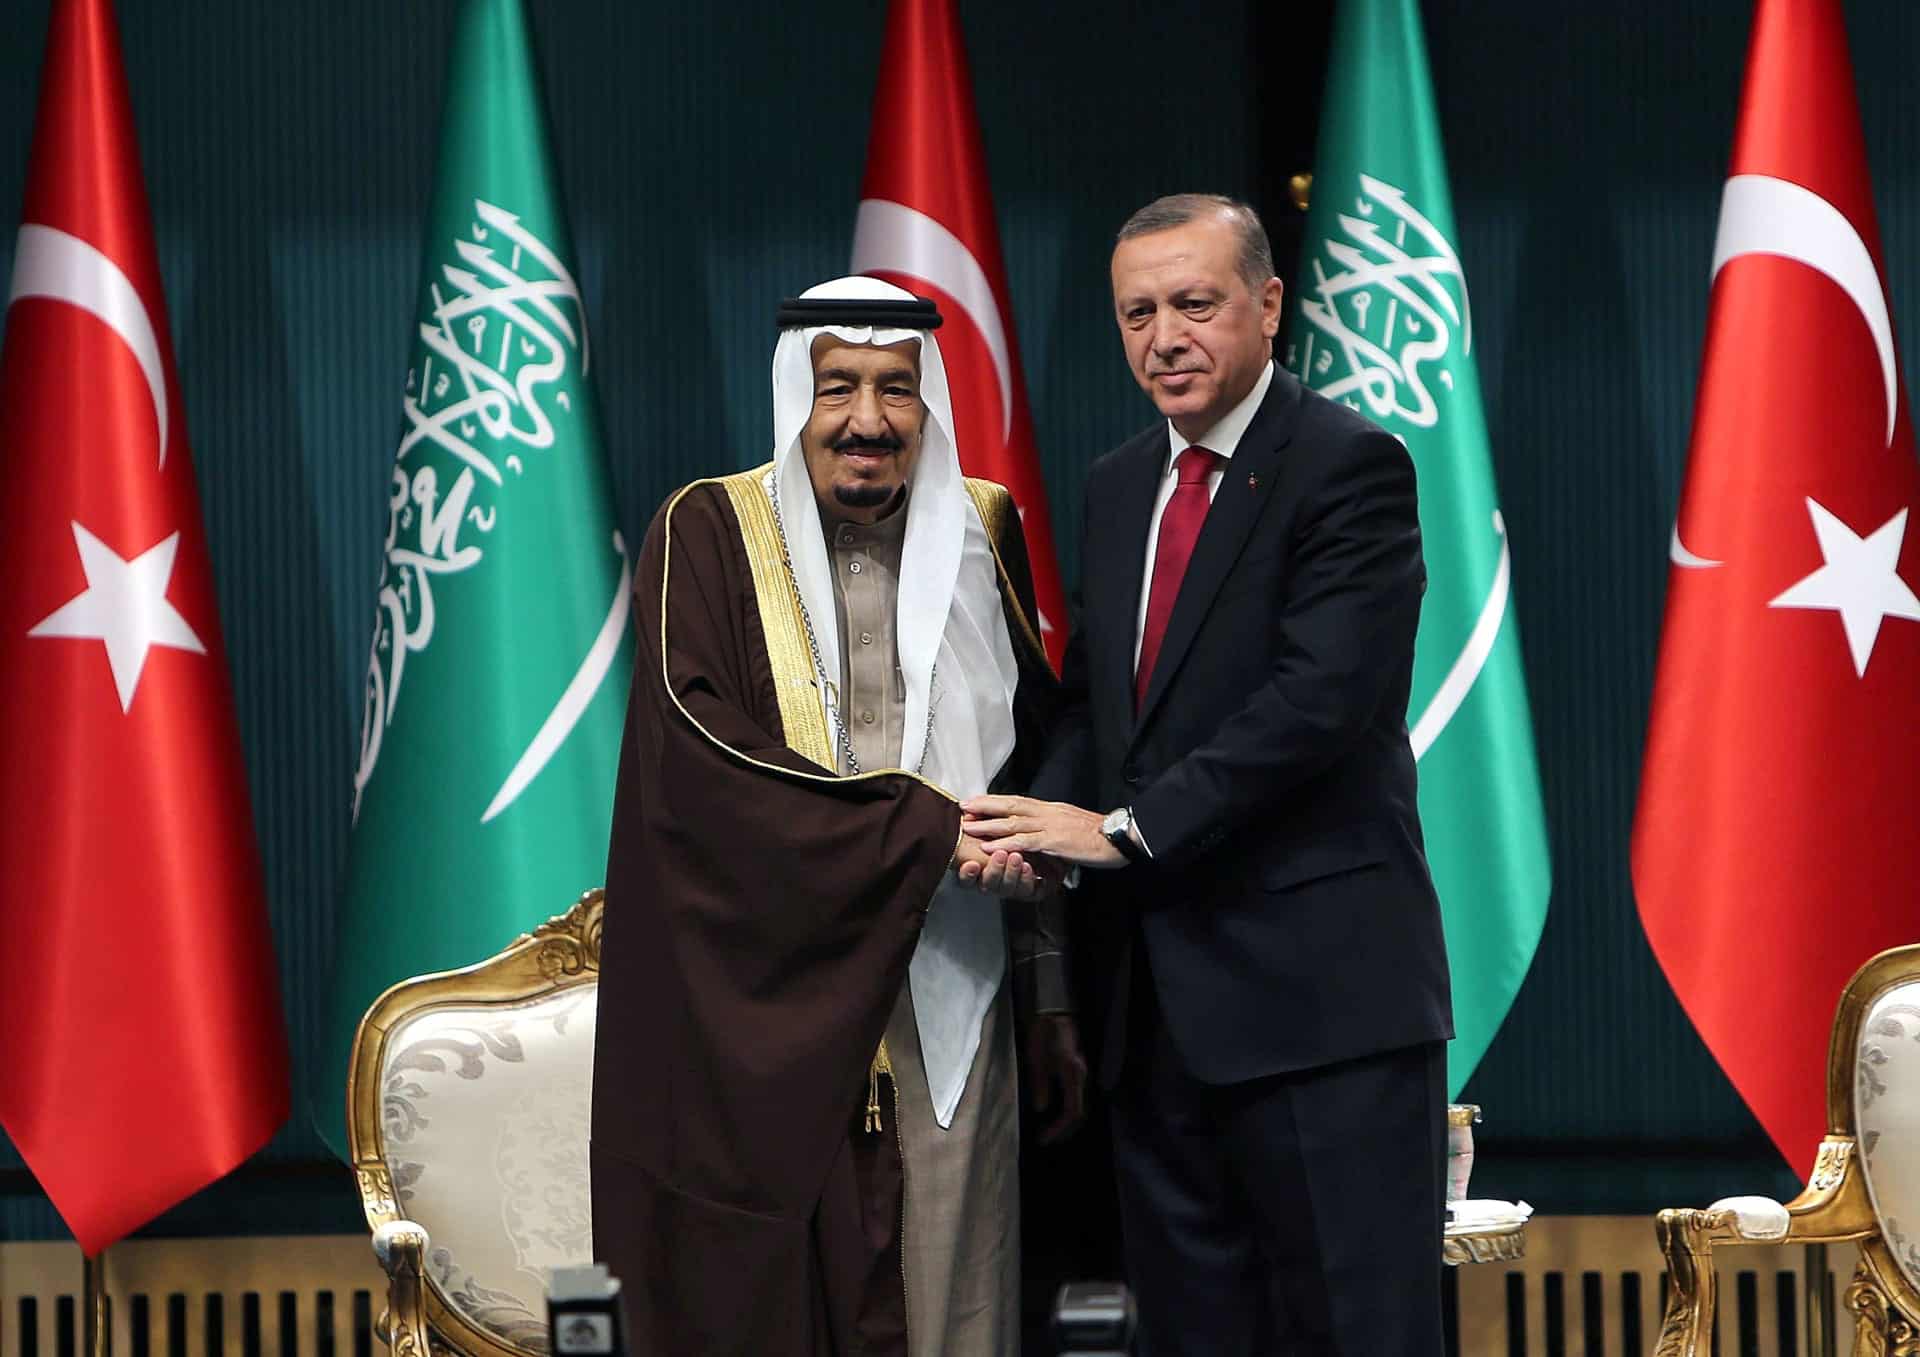 Erdoğan Visits Saudi Arabia to start building new alliances